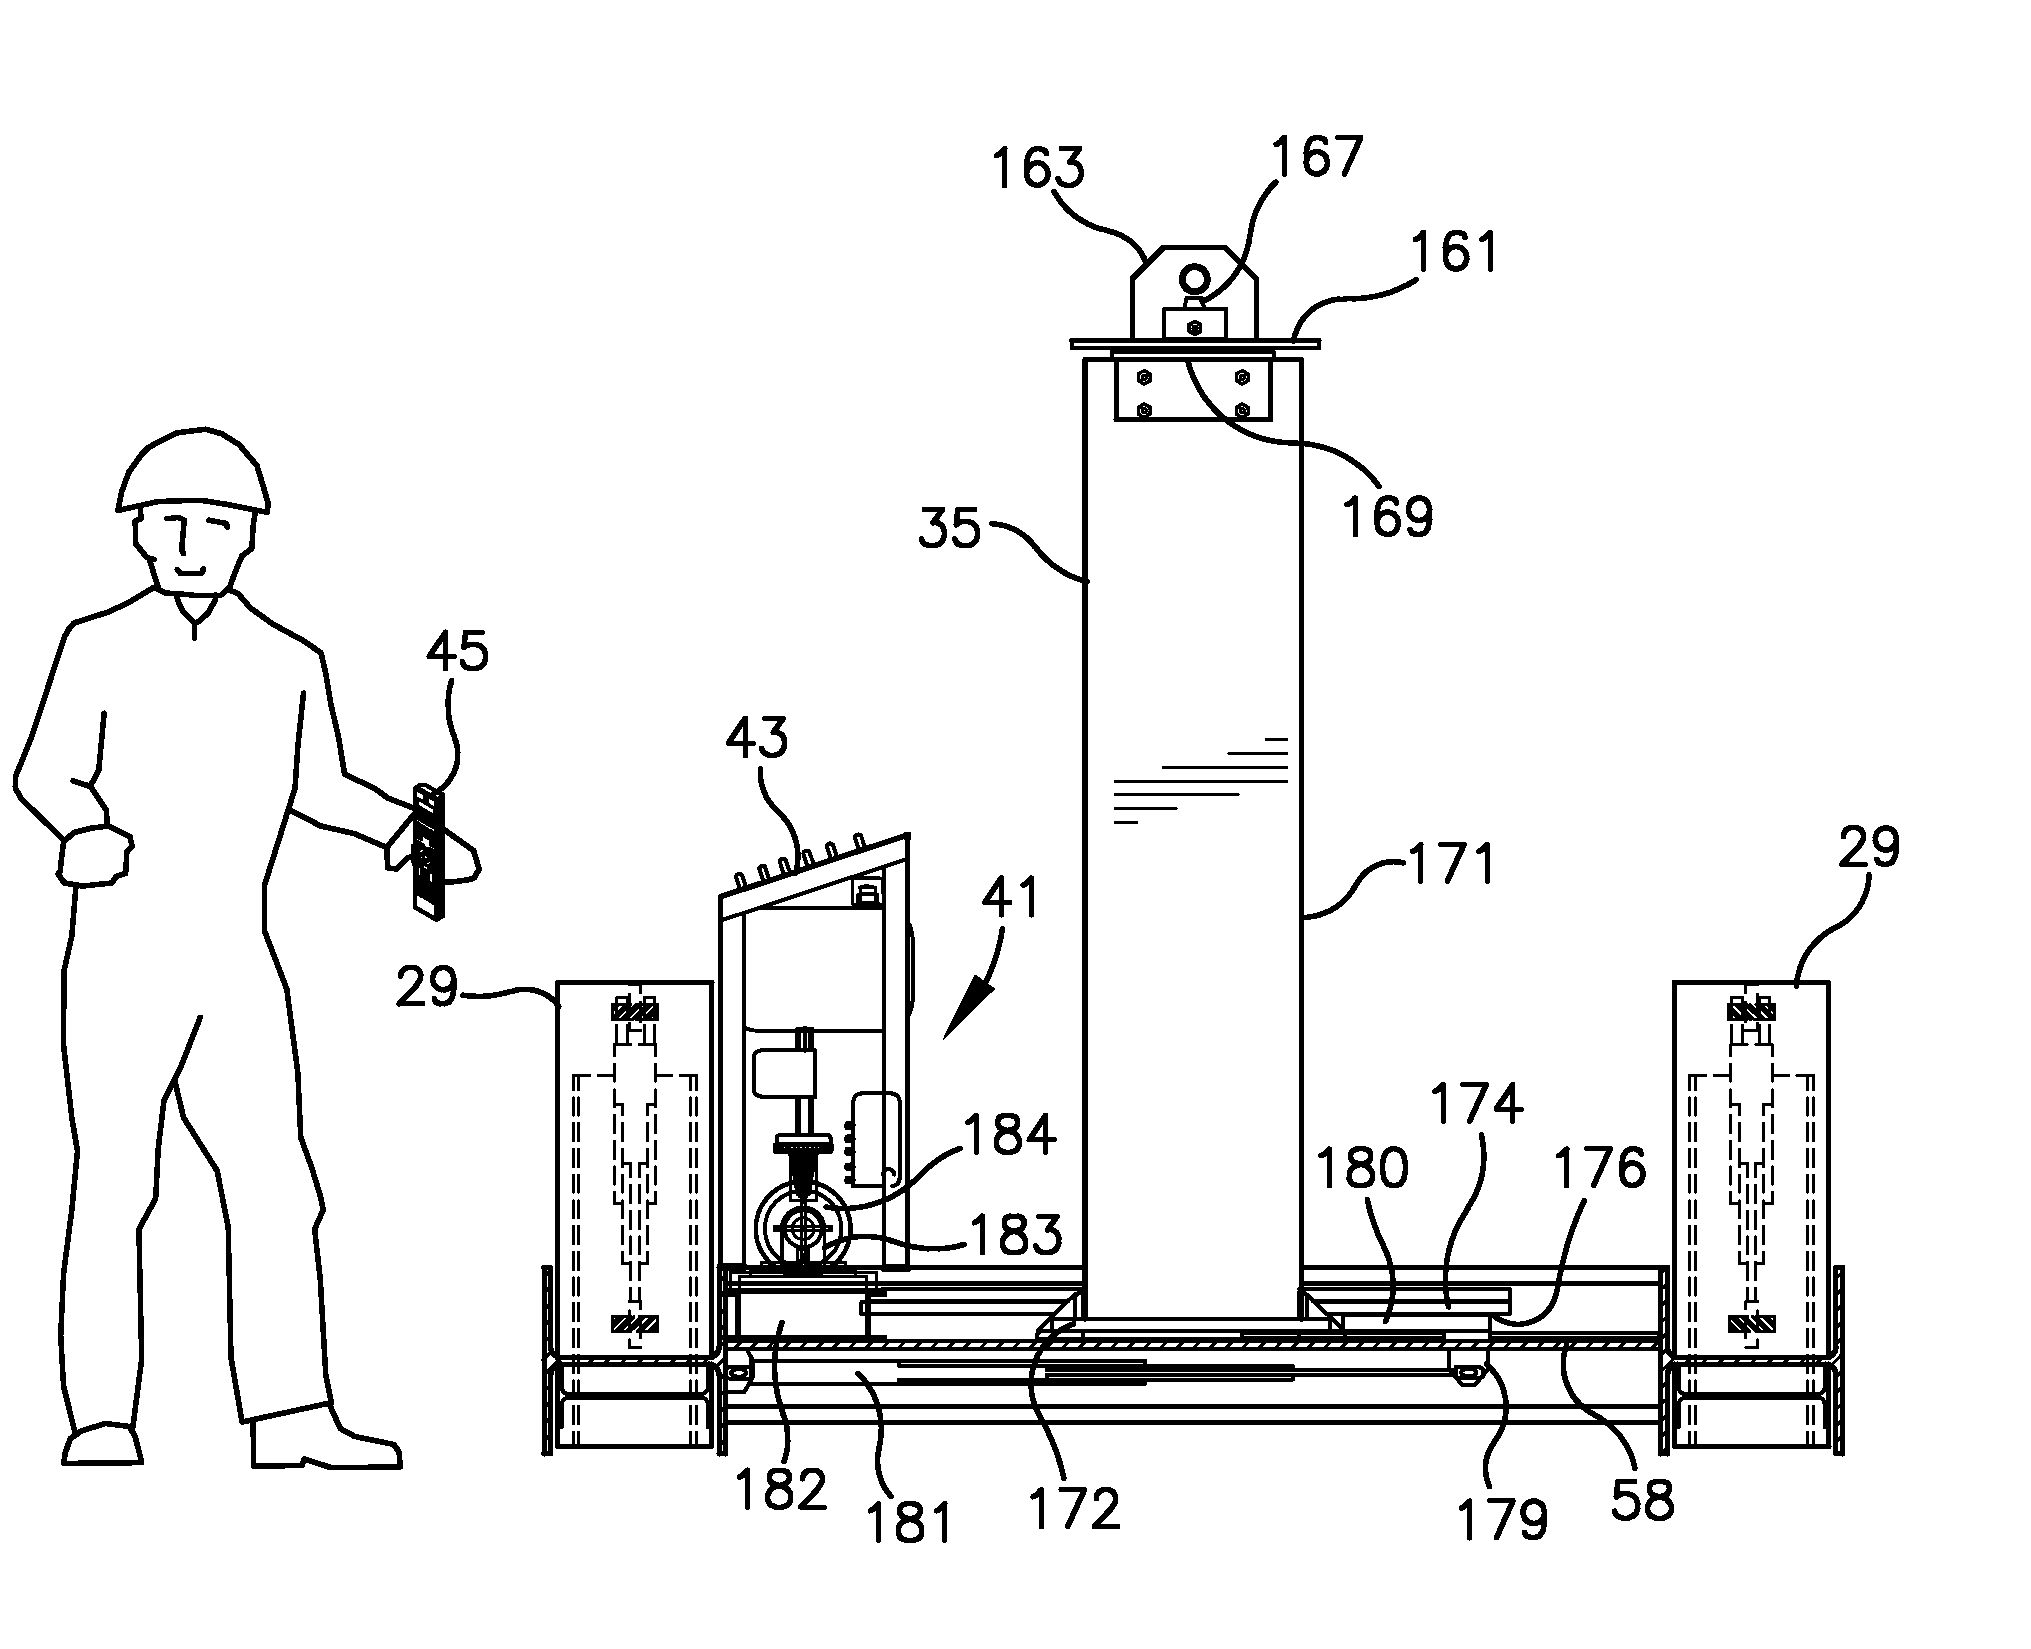 Fragmented slab lifting apparatus and method